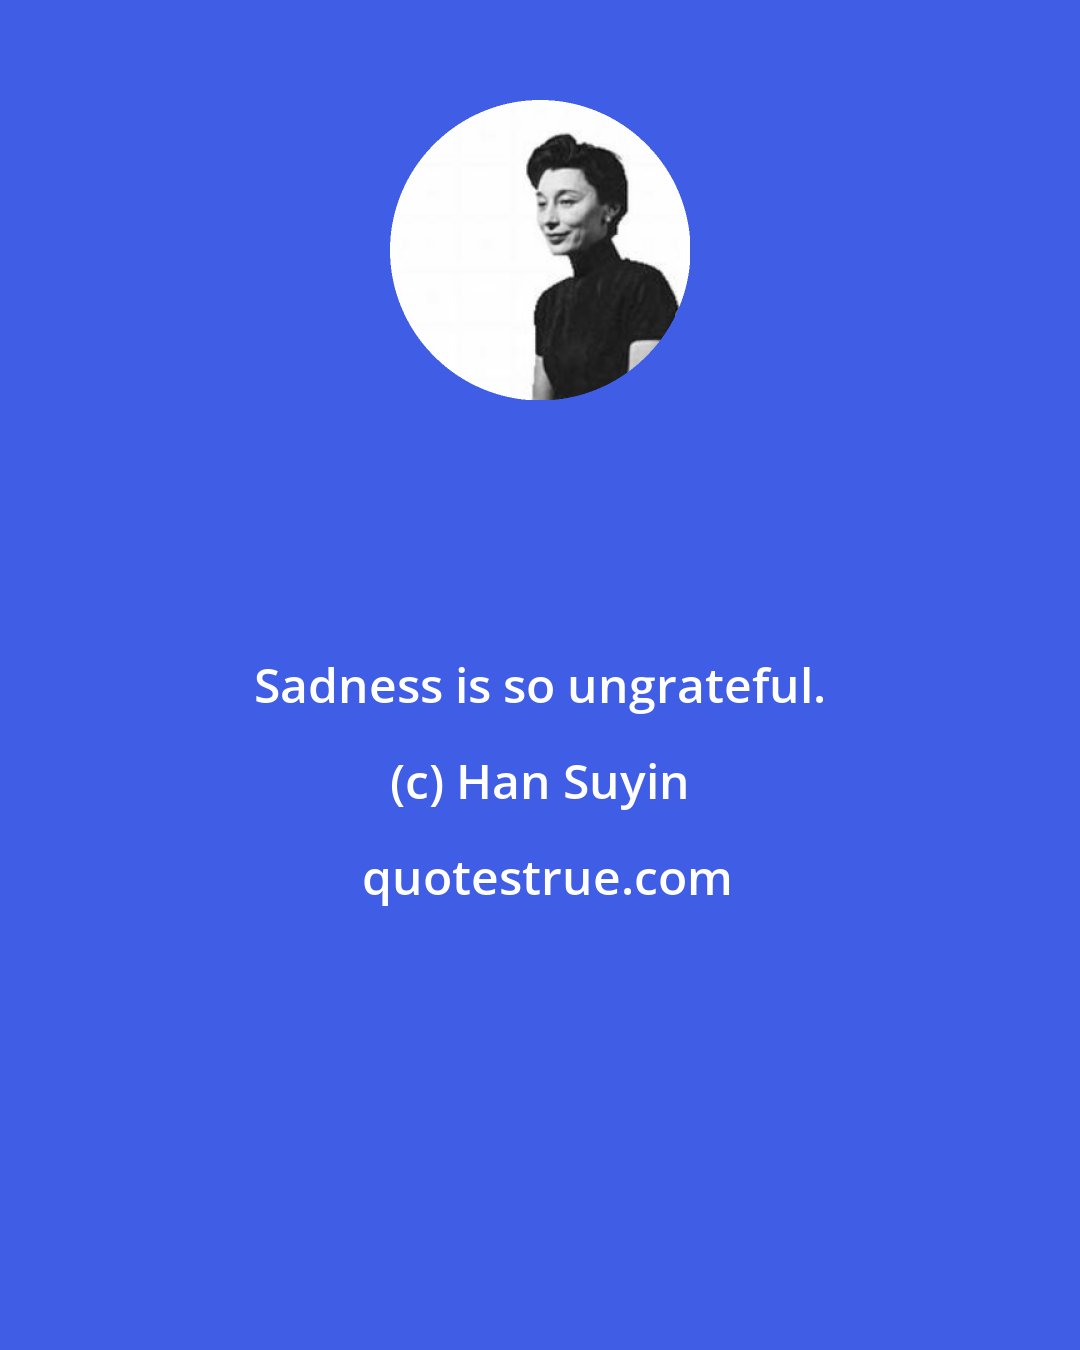 Han Suyin: Sadness is so ungrateful.